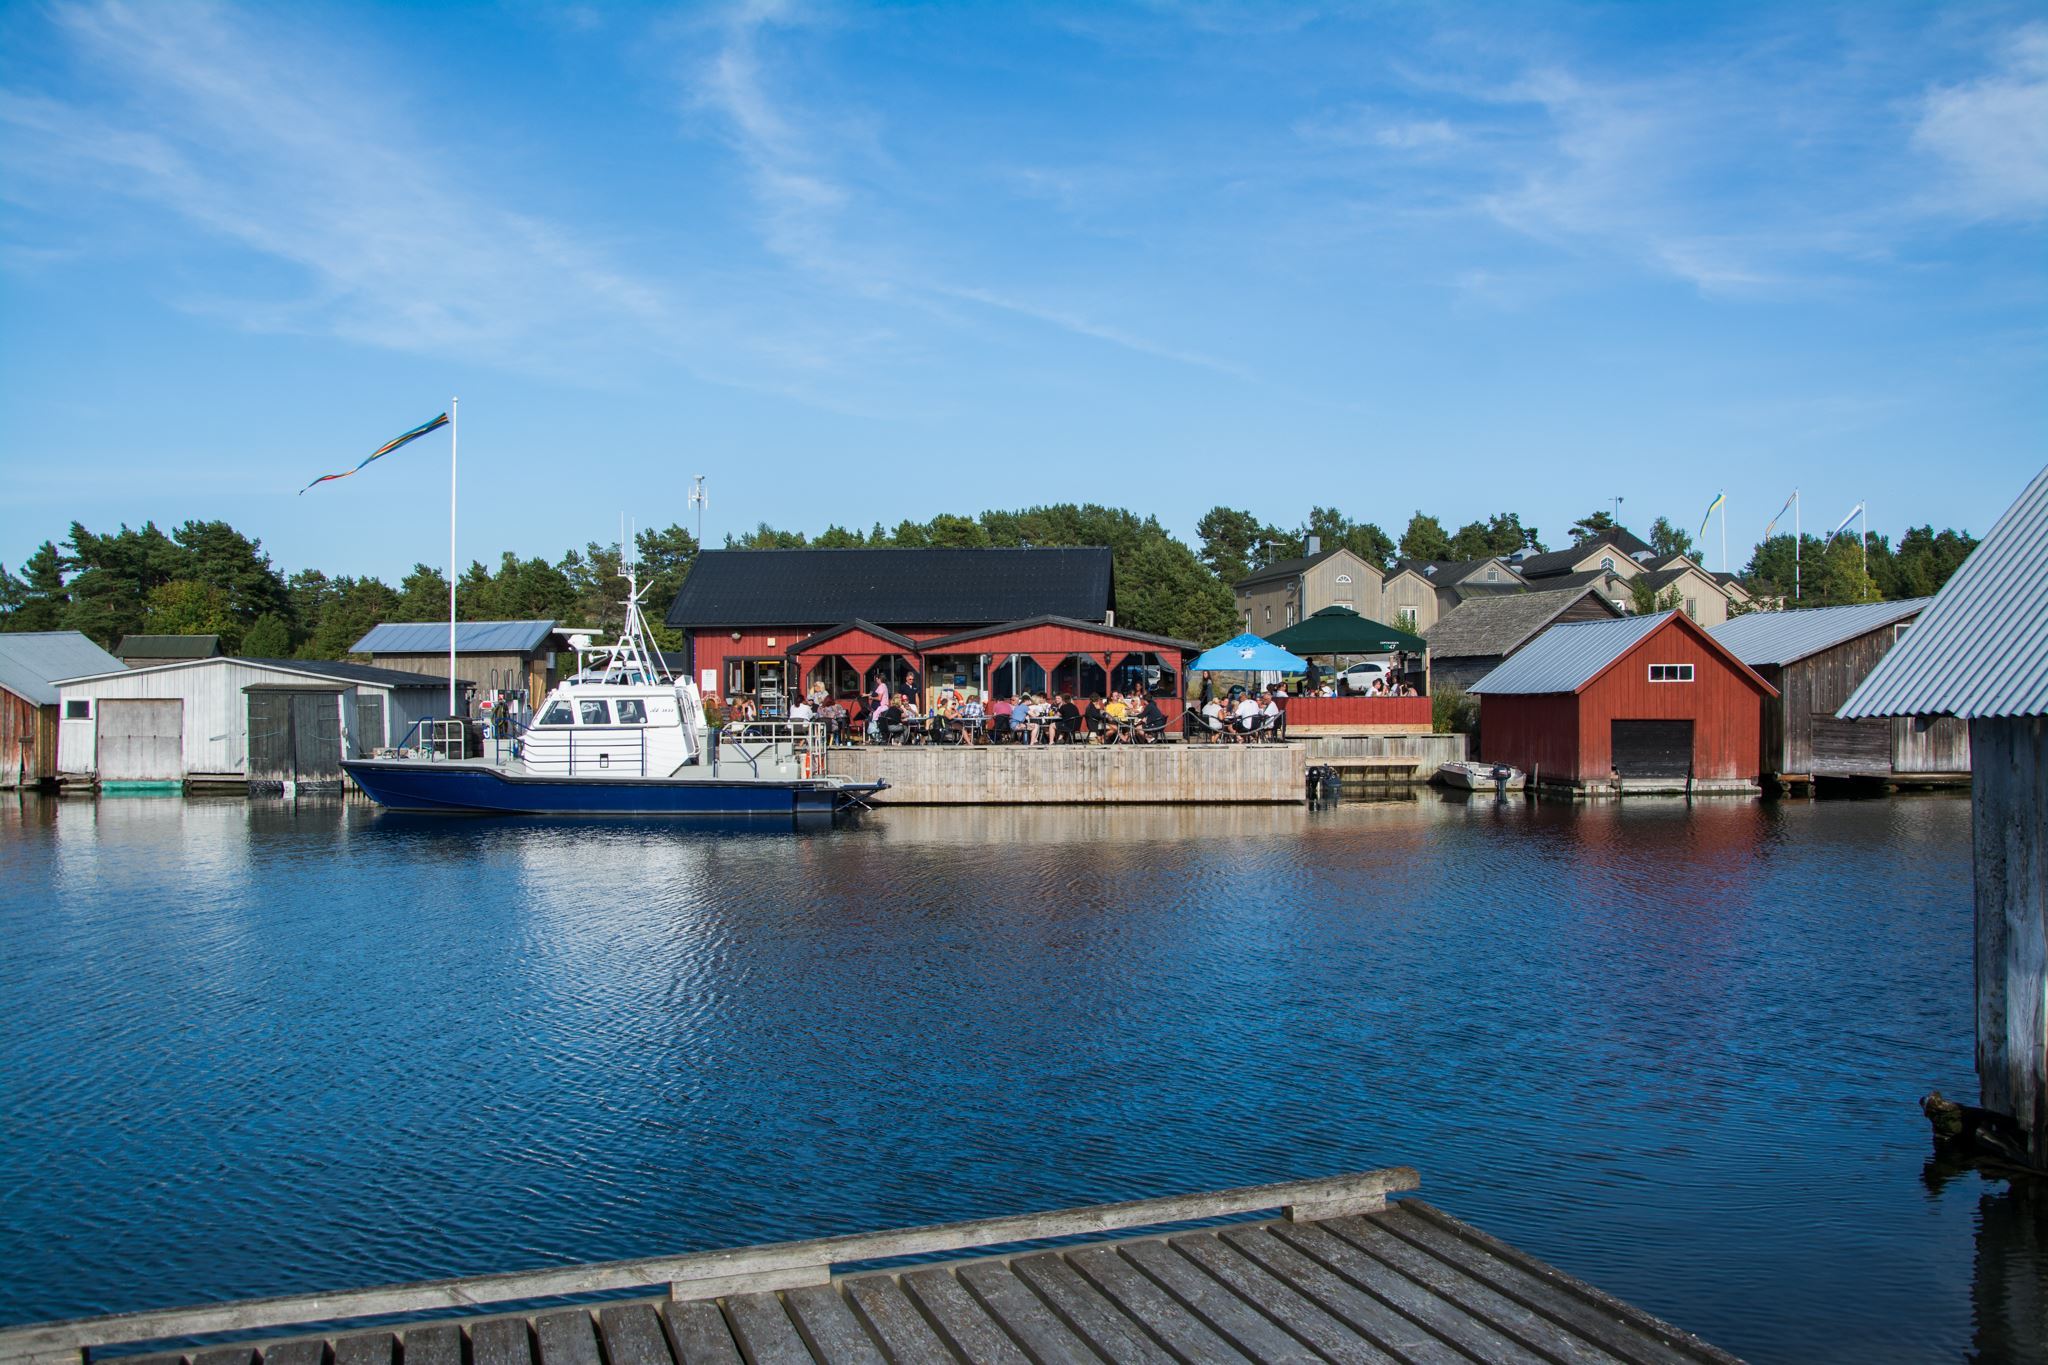 Gastropub Bodegan, Restauranger Visit Åland